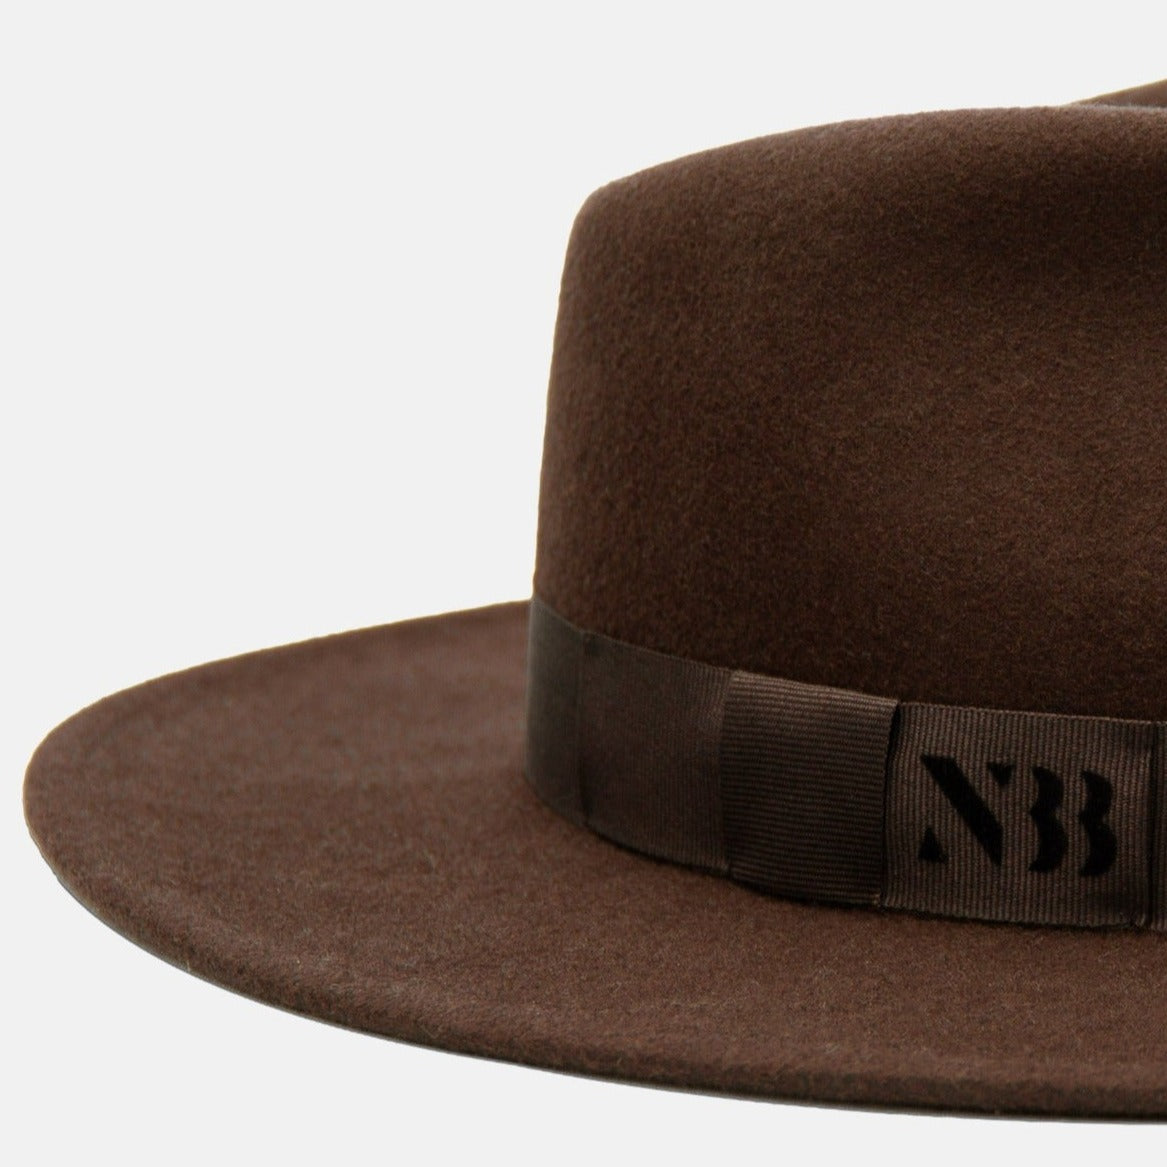 NTHIRTYTHREE - N33 - Fedora Felt Hat - Signature Mocha - handmade in Europe